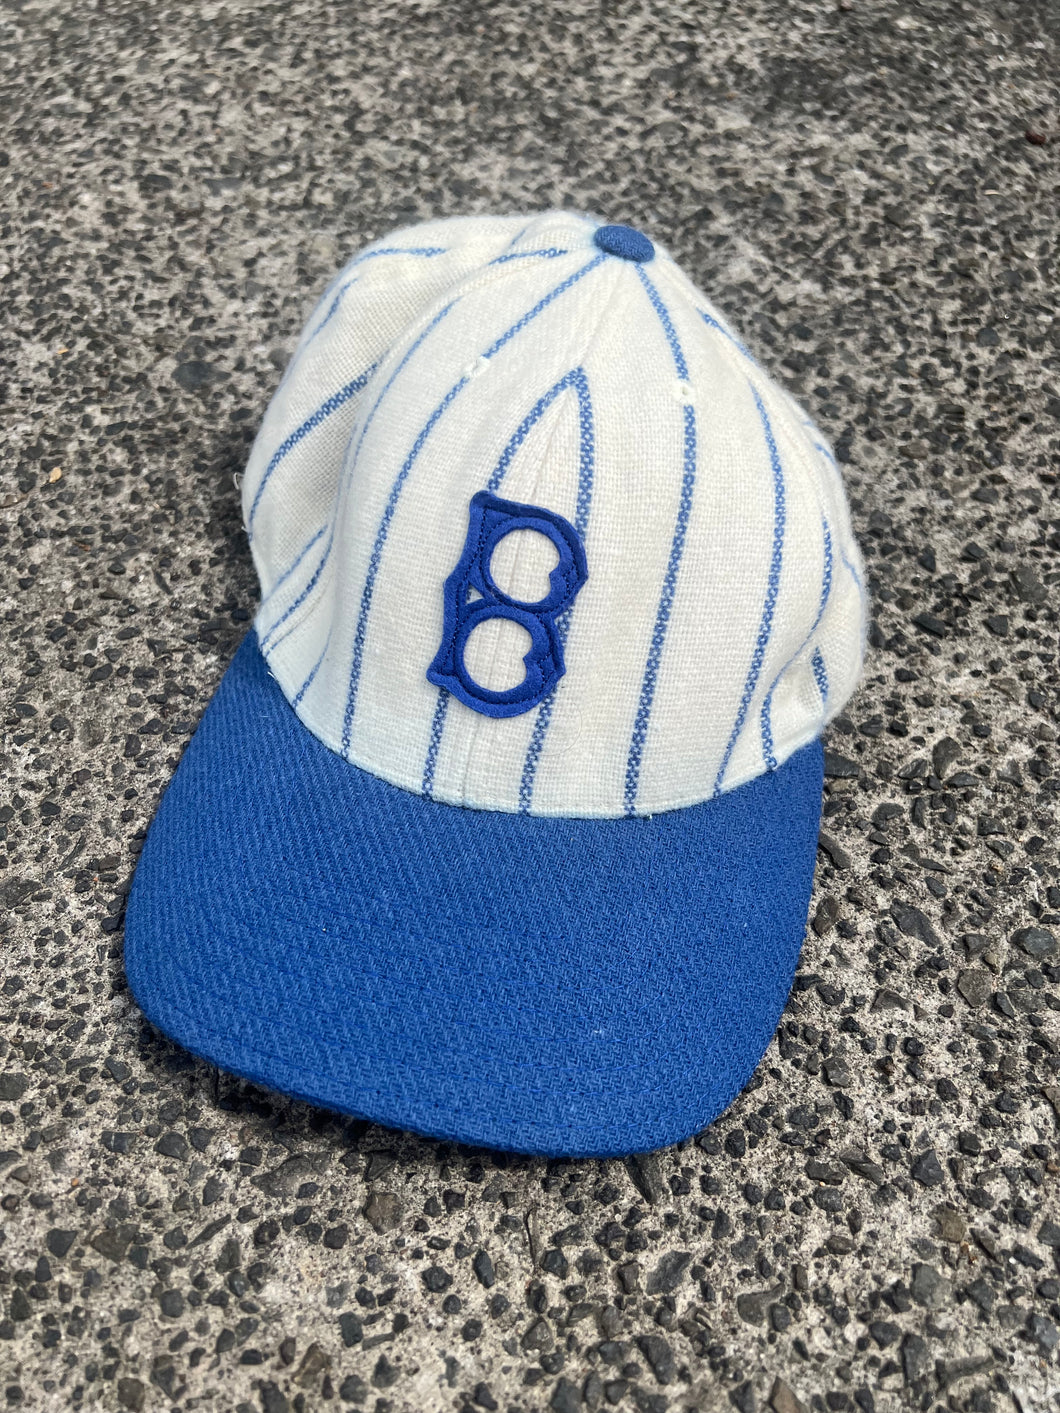 MLB - BOSTON REDSOX PIN STRIPE FITTED HAT - 7